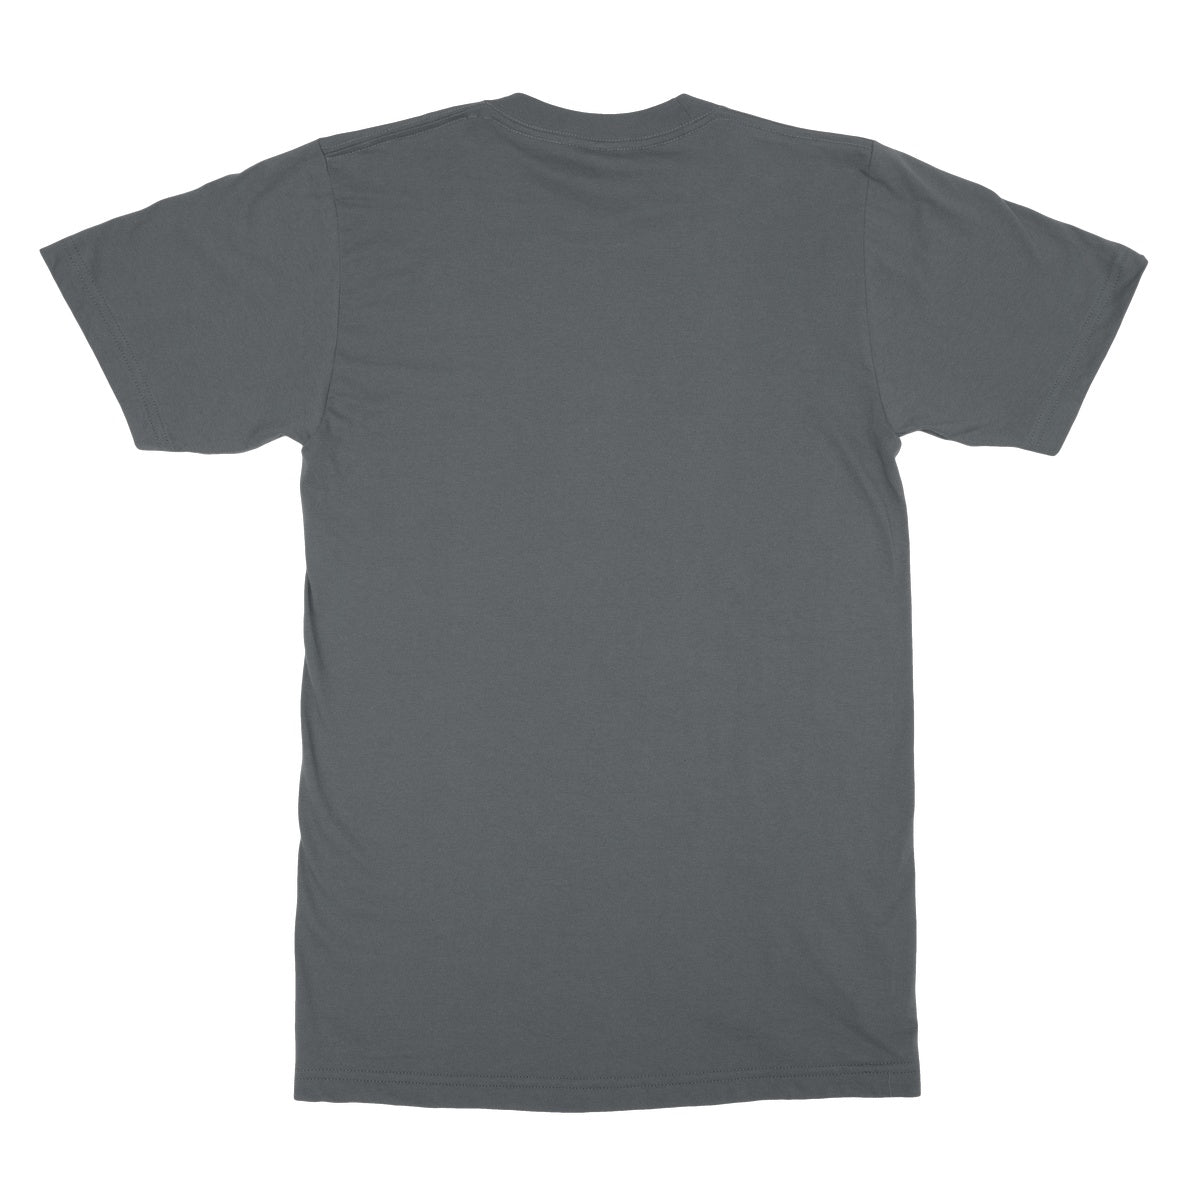 Mandolin Patent T-Shirt